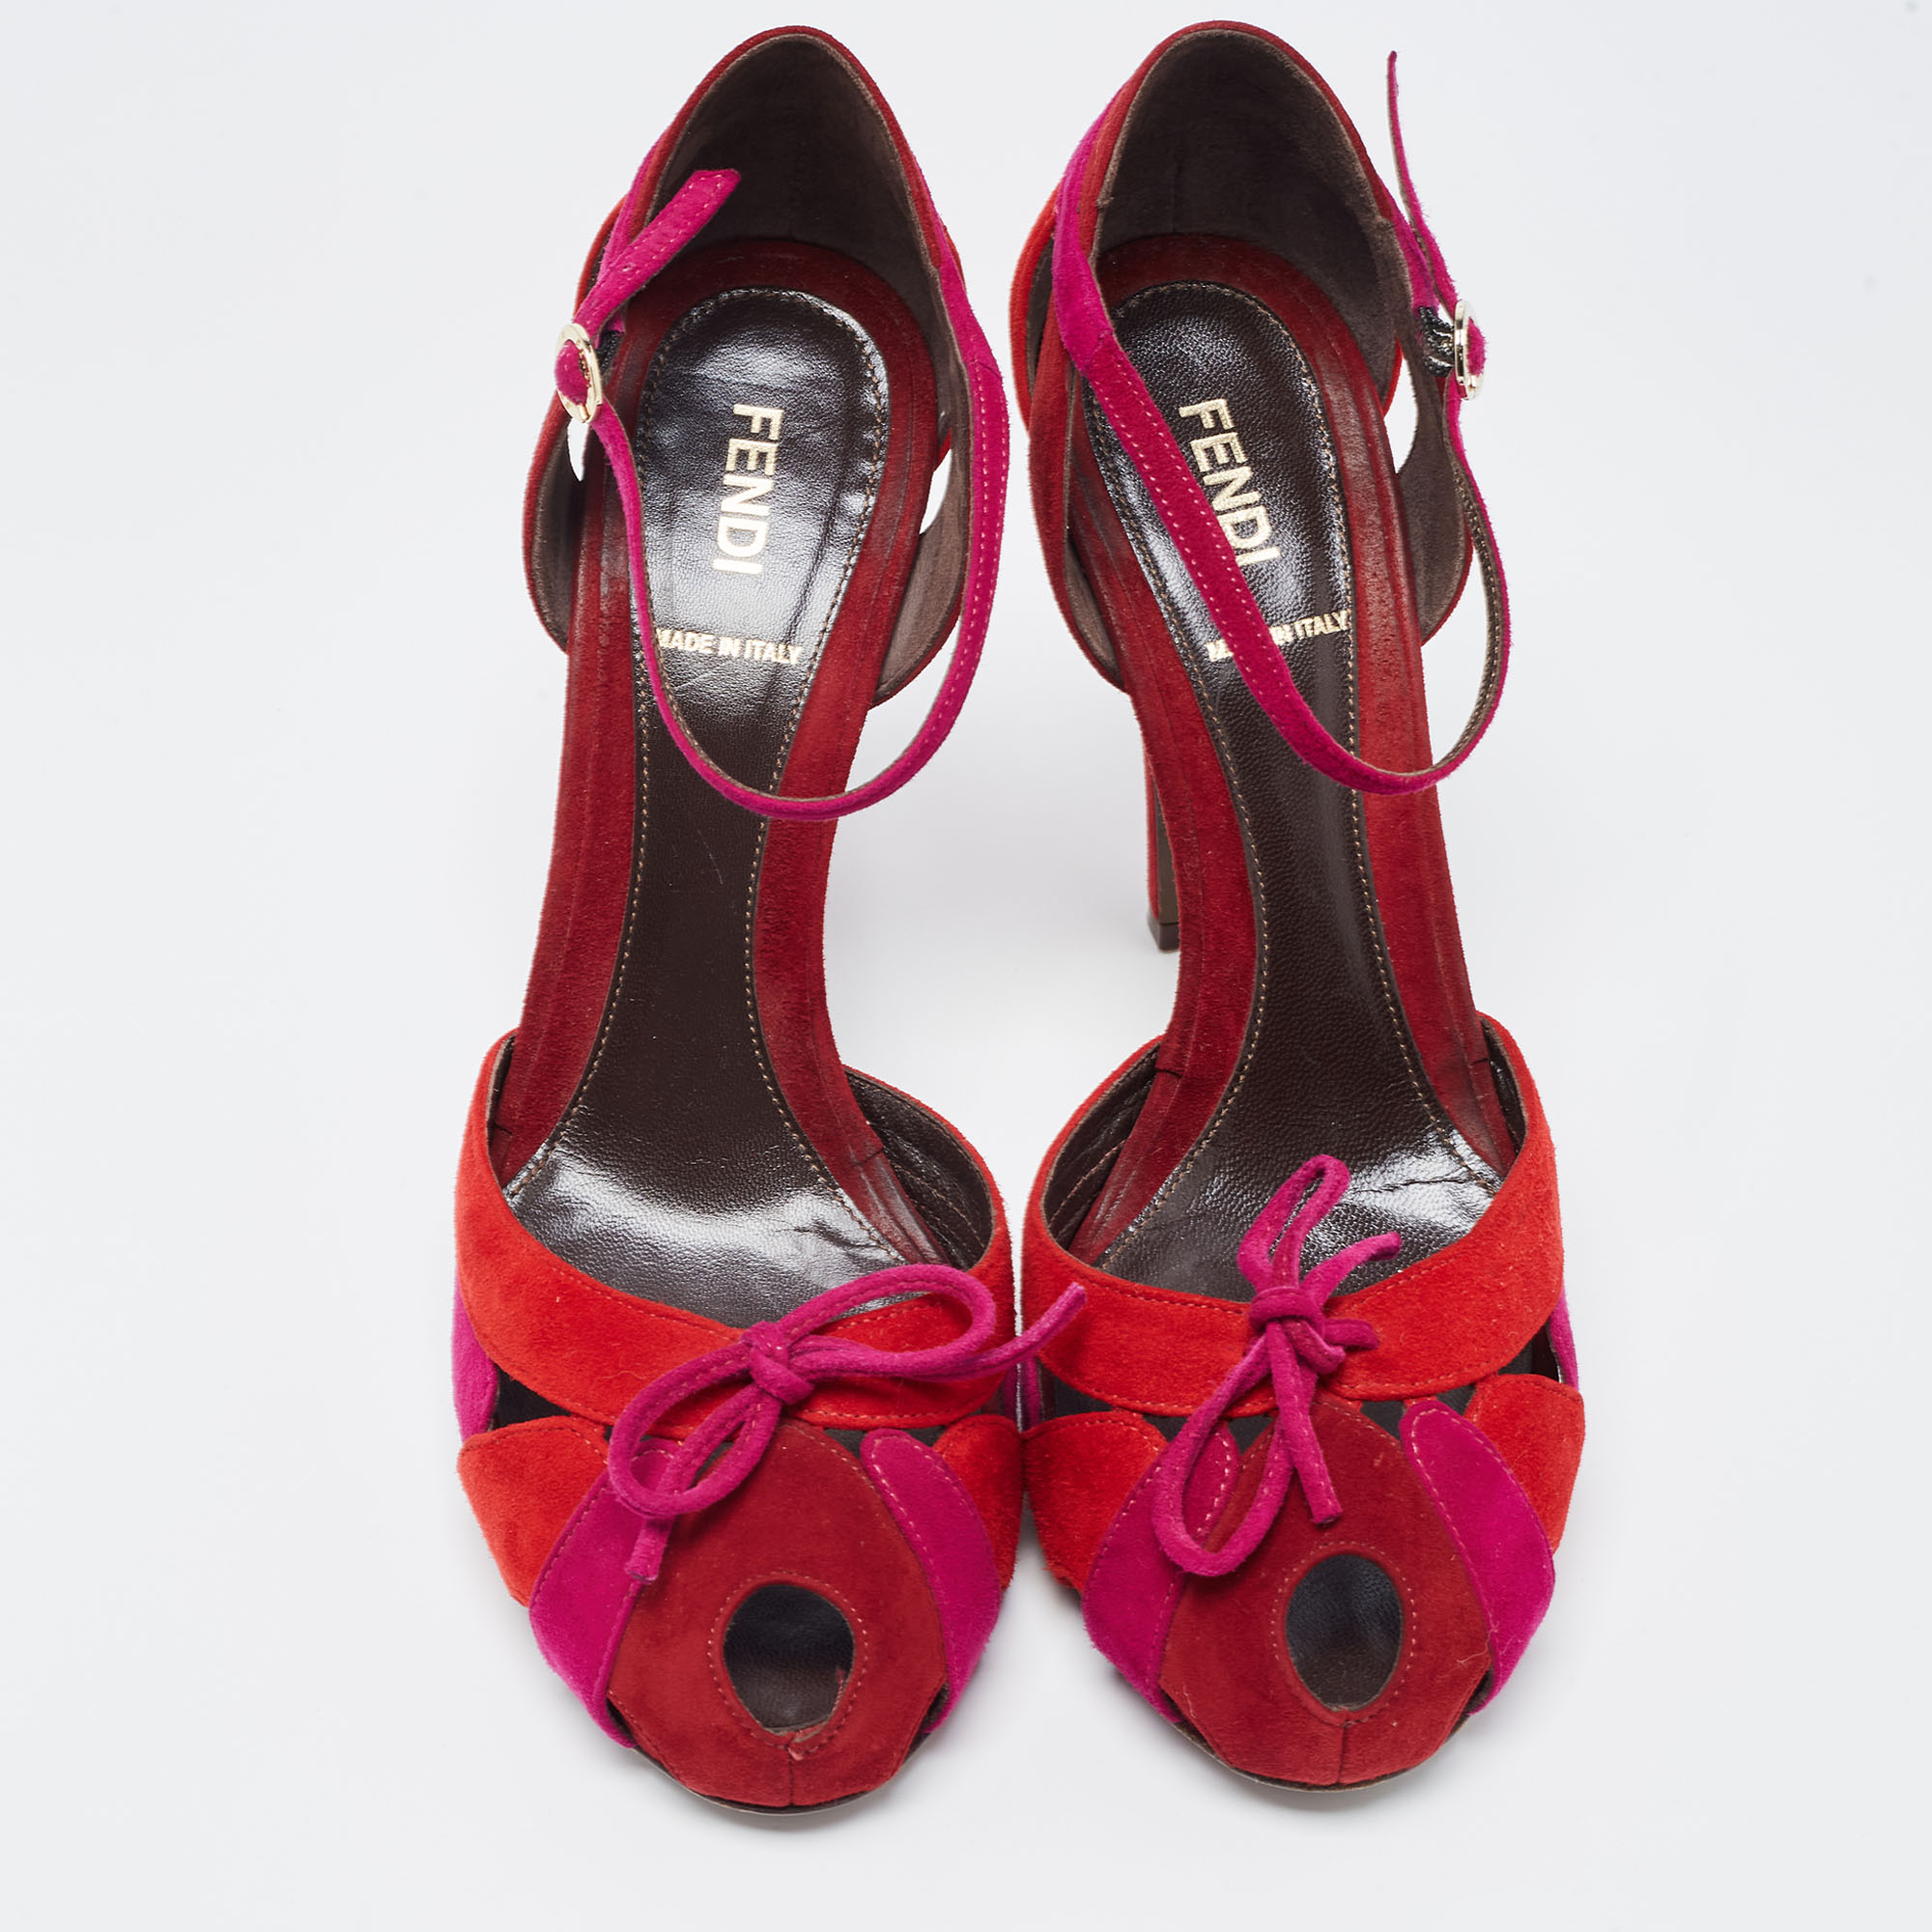 Fendi Tricolor Suede Bow Peep Toe D'orsay Ankle Strap Pumps Size 39